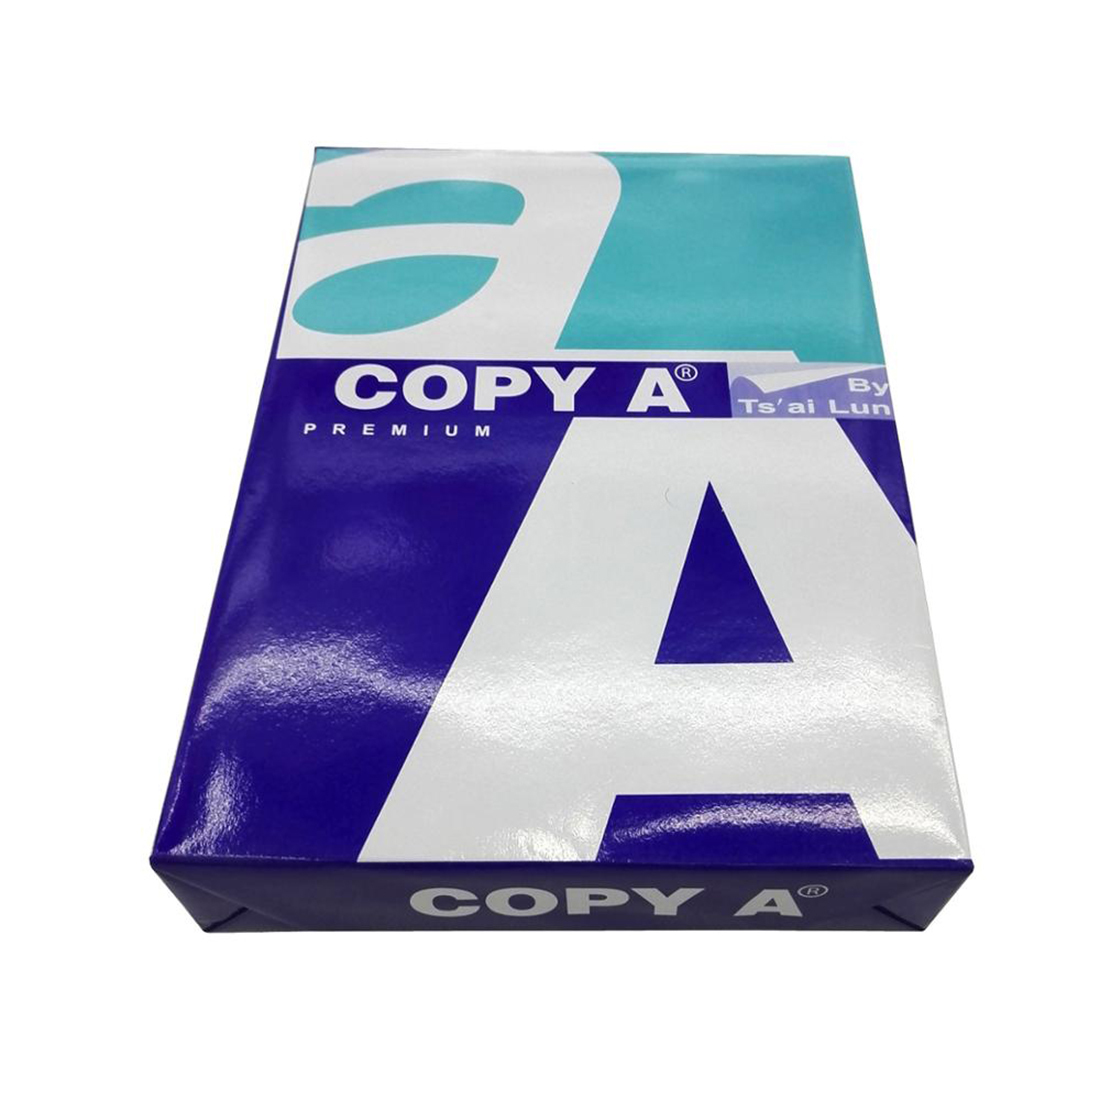 Copy A A4, A3, A5 Size paper<br>